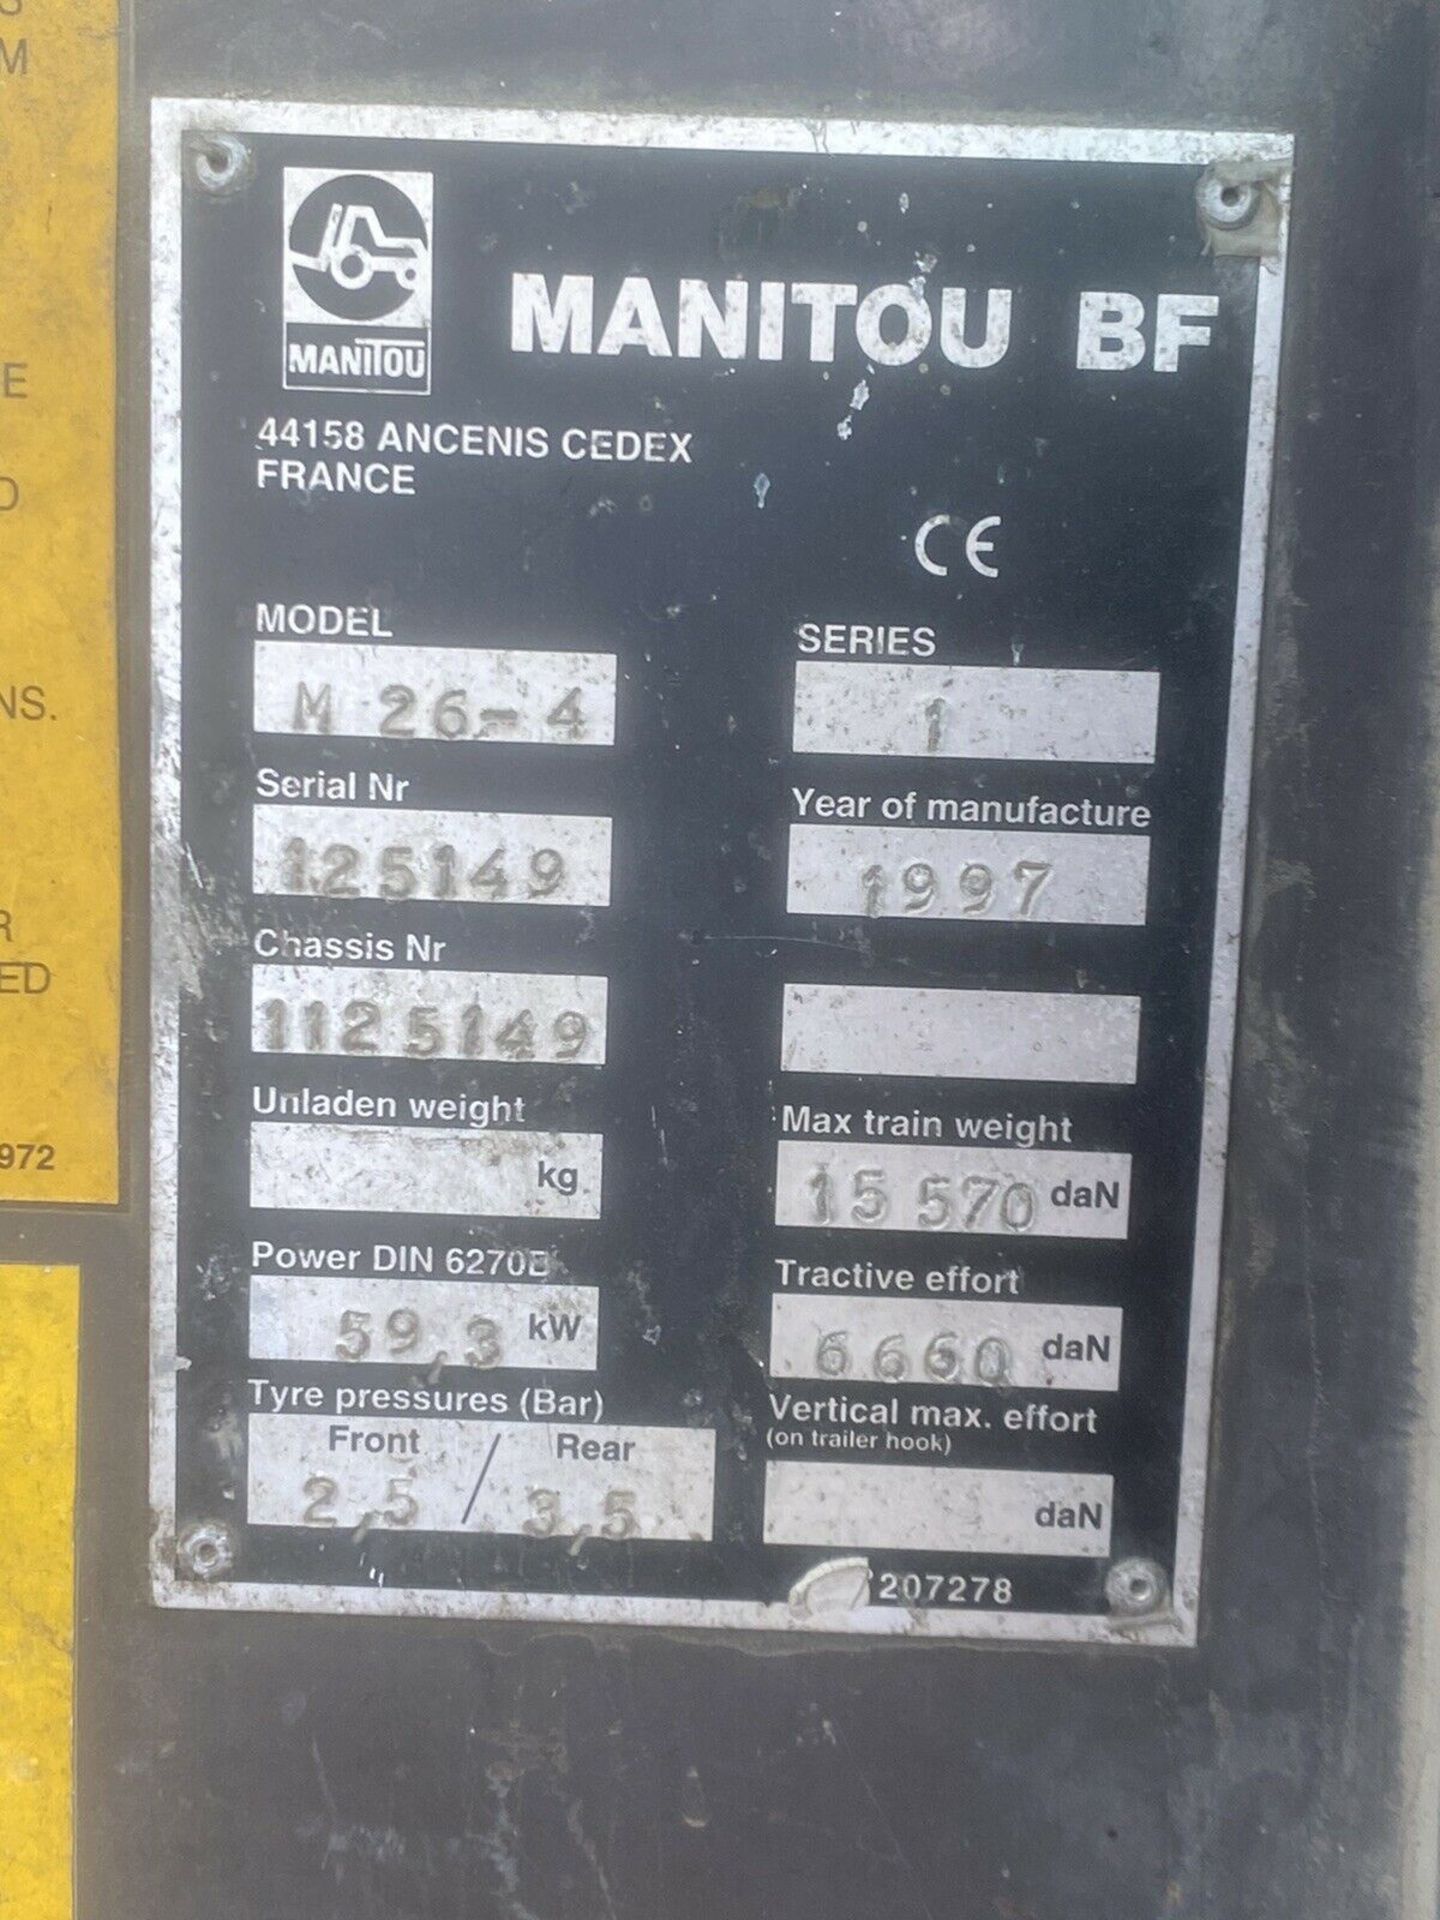 Mantou M26.4 four wheel drive diesel forklift - Image 8 of 10